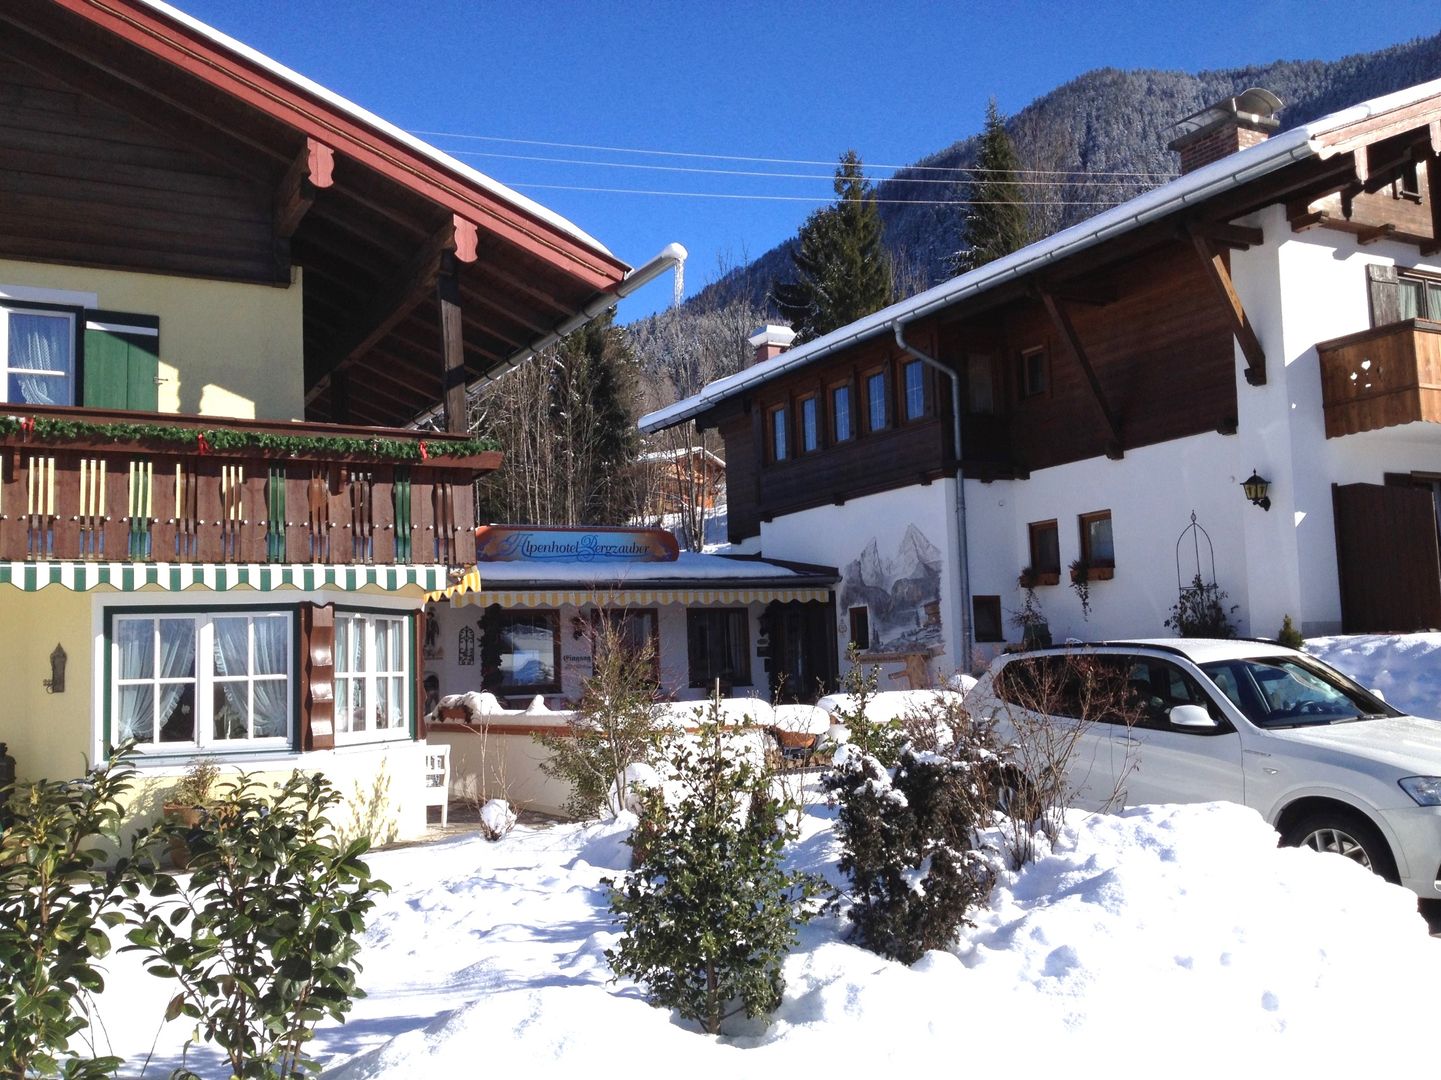 Aanbieding wintersport Berchtesgadener Land ❄ Alpenhotel Bergzauber